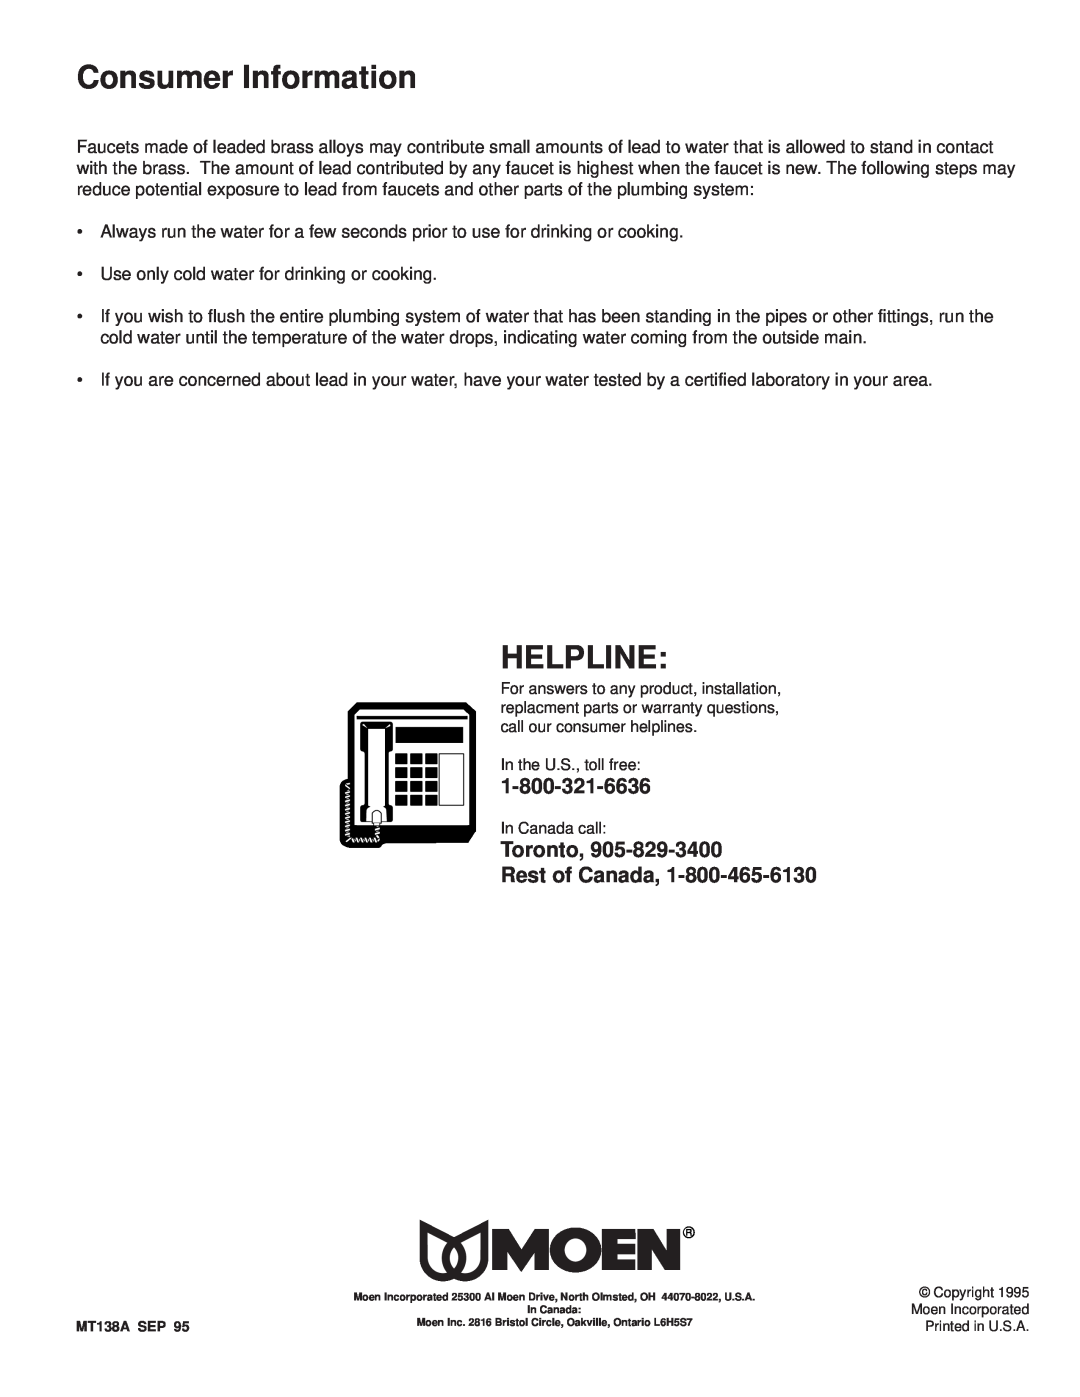 Moen MT138A installation instructions Consumer Information, Helpline, Toronto, Rest of Canada 